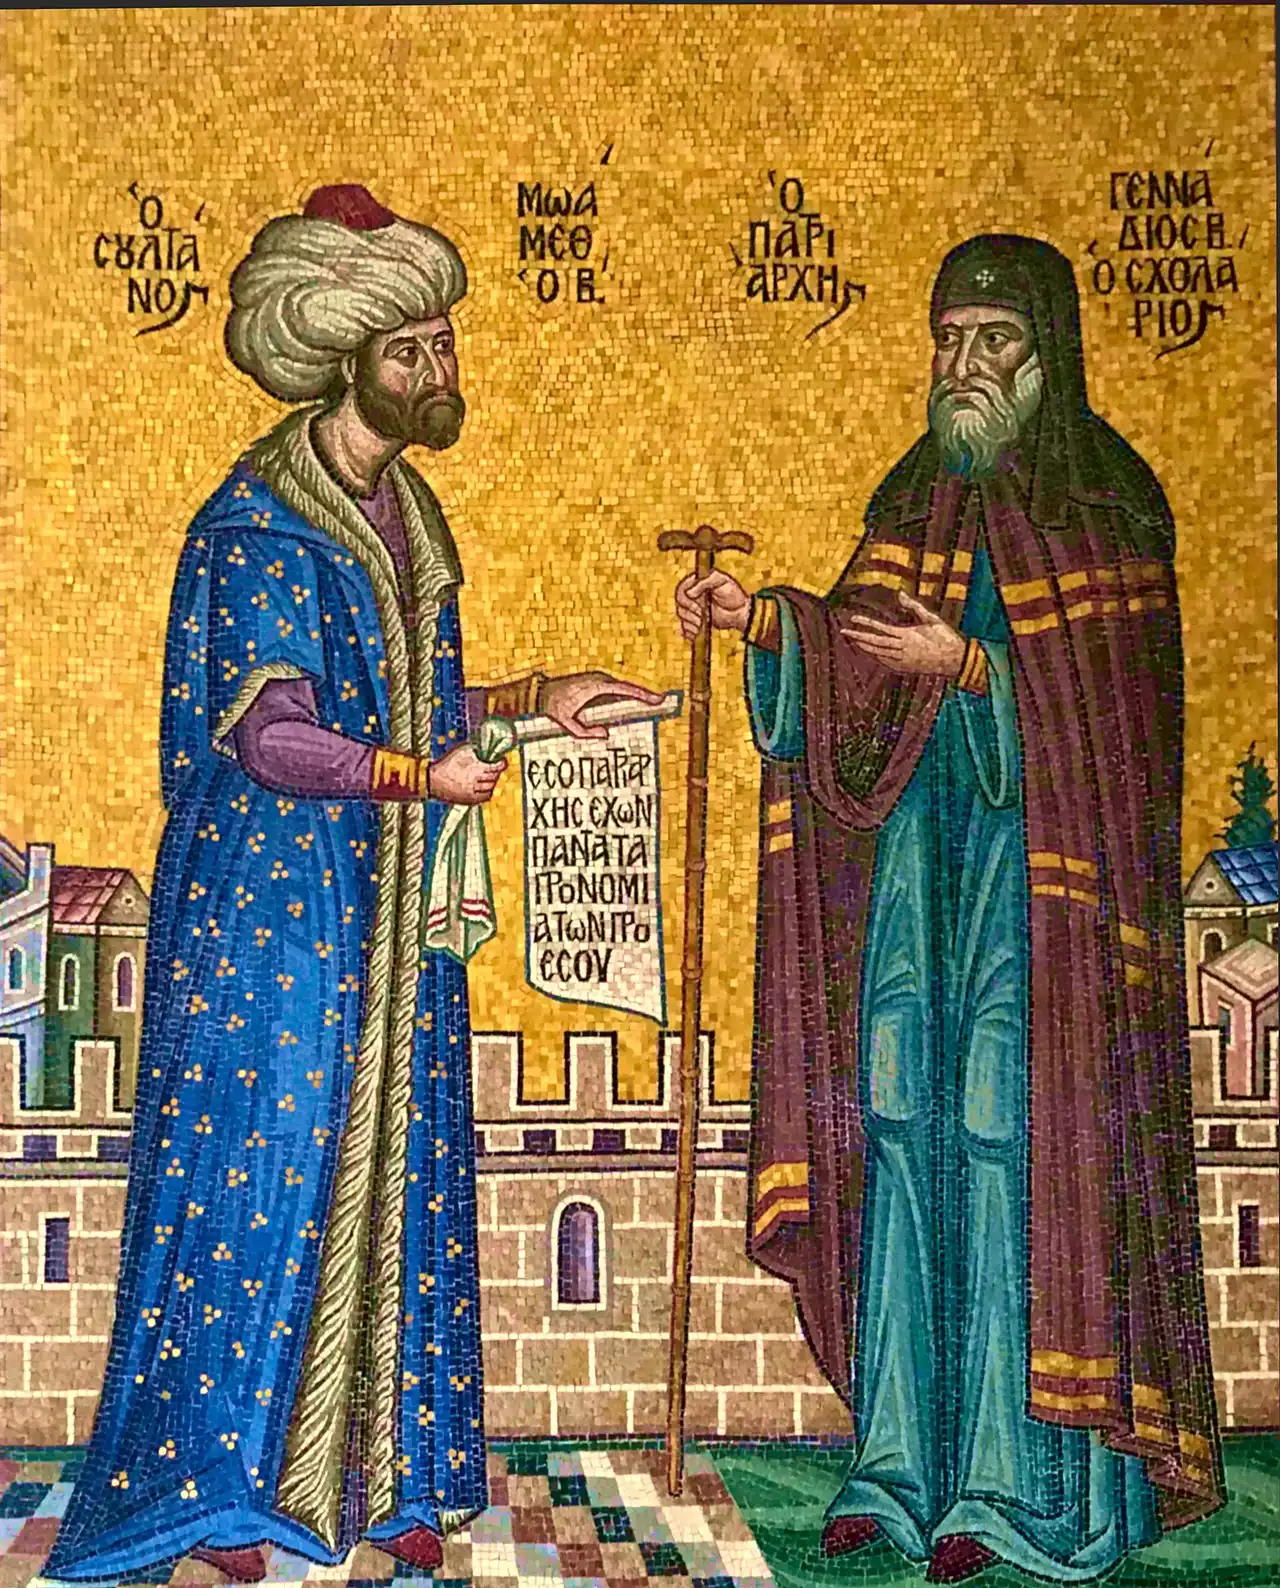 Sultan-Mehmed-II-grants-privileges-to-Patriarch-Gennadios-in-Varvoglis'-mosaic.